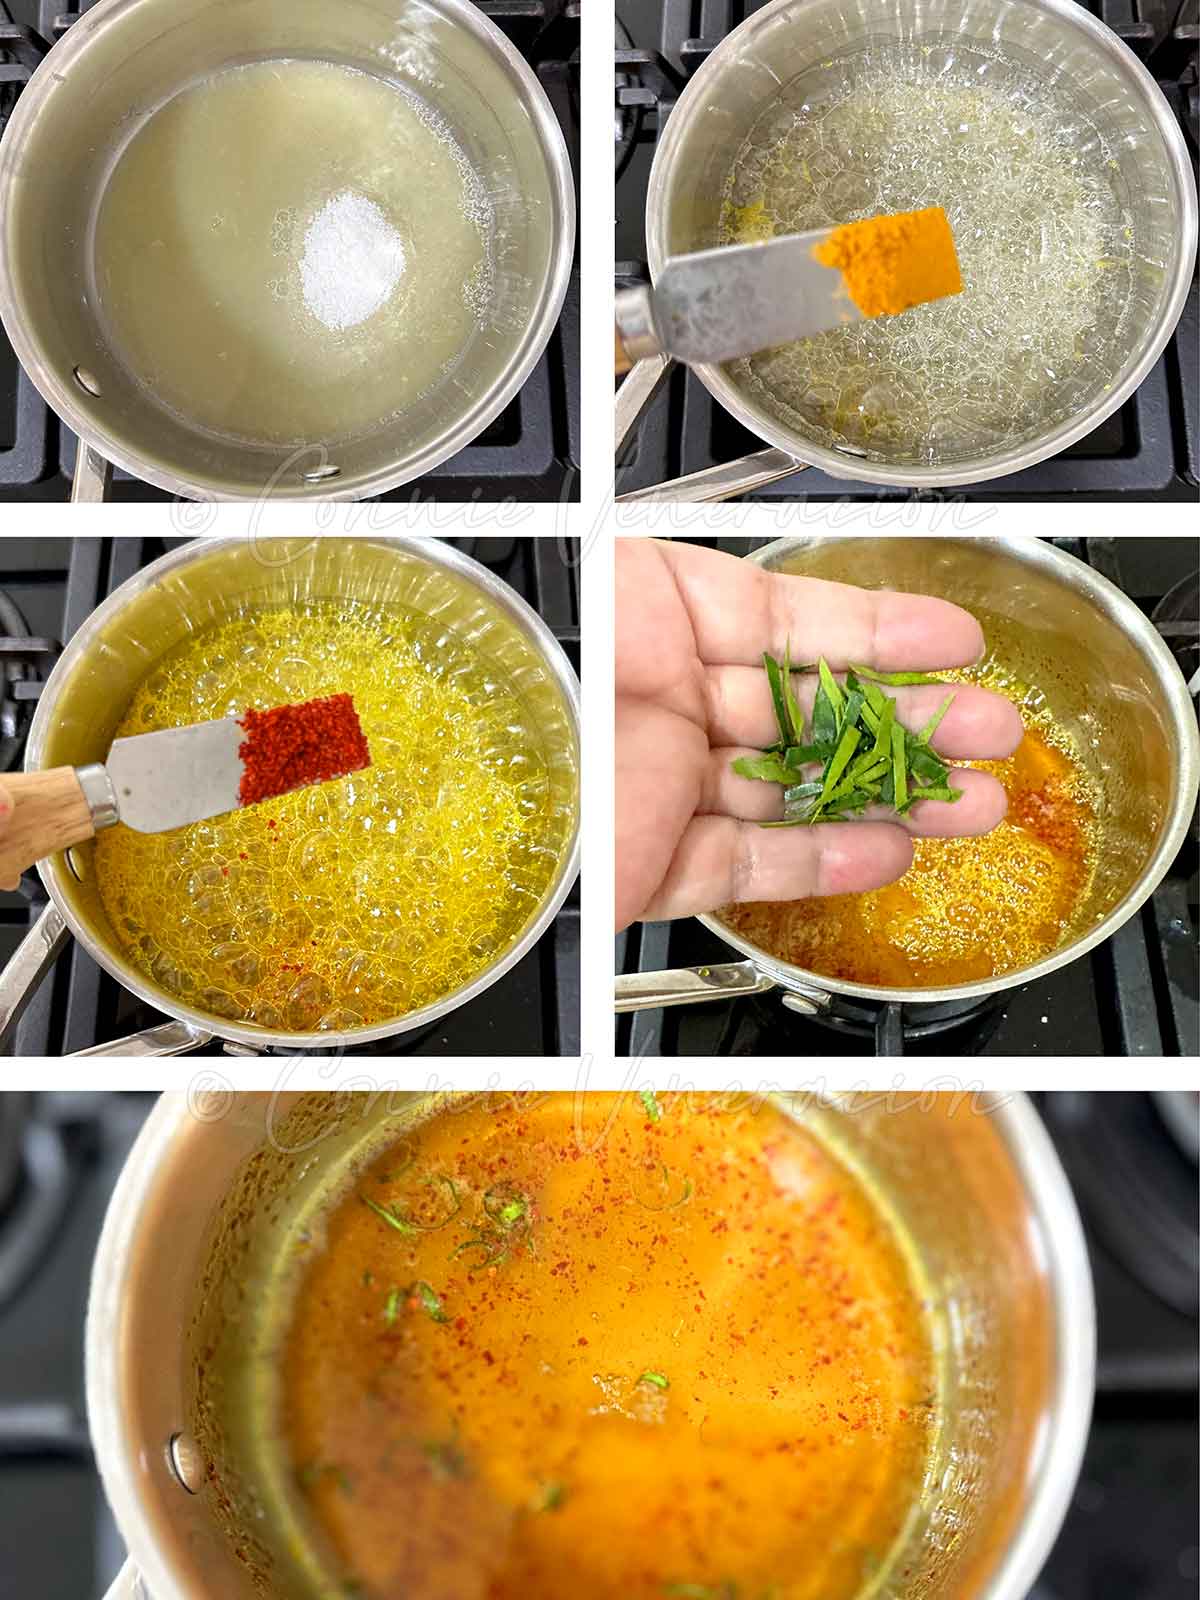 Making lemon sauce with lemon juice, sugar, turmeric, chili flakes, kaffir lime leaves, grated ginger and salt